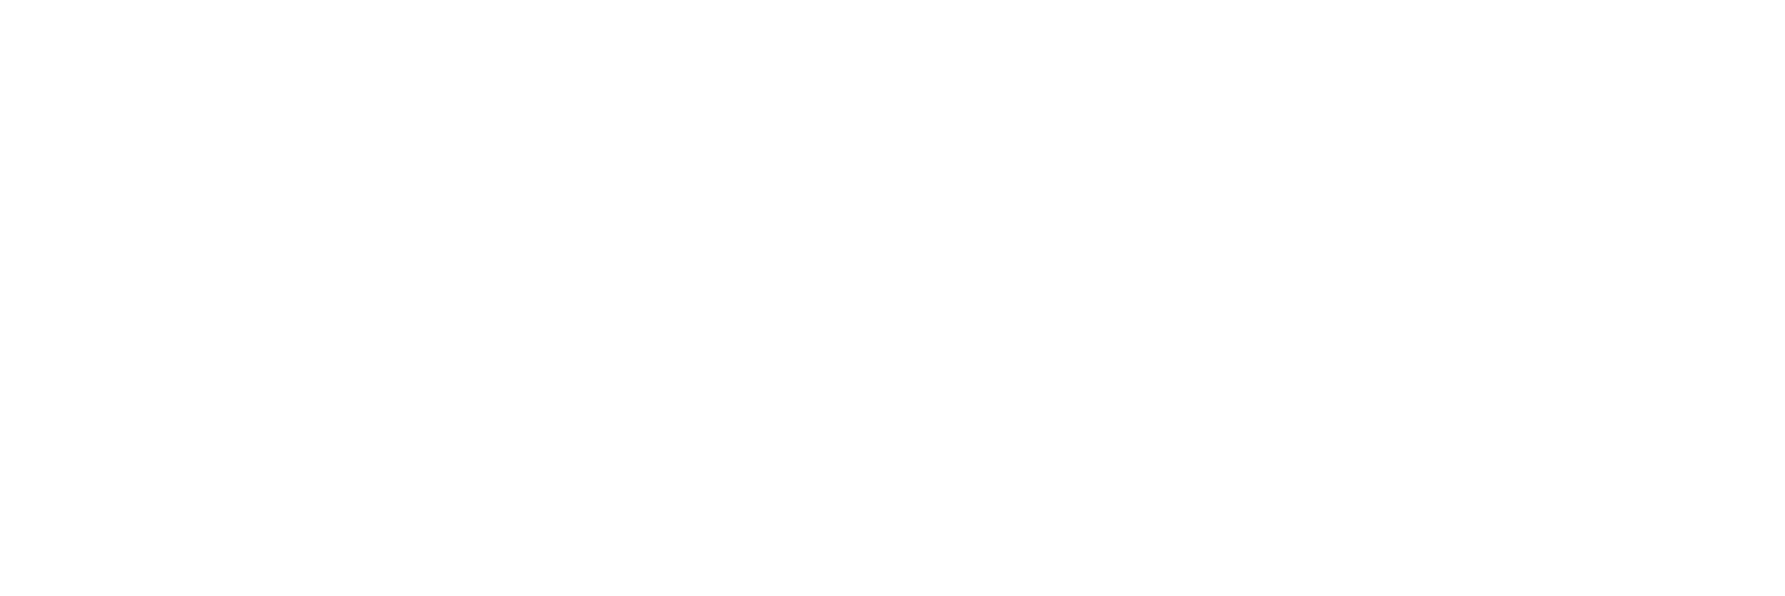 GK Design International, Inc.  |  Los Angeles / Atlanta